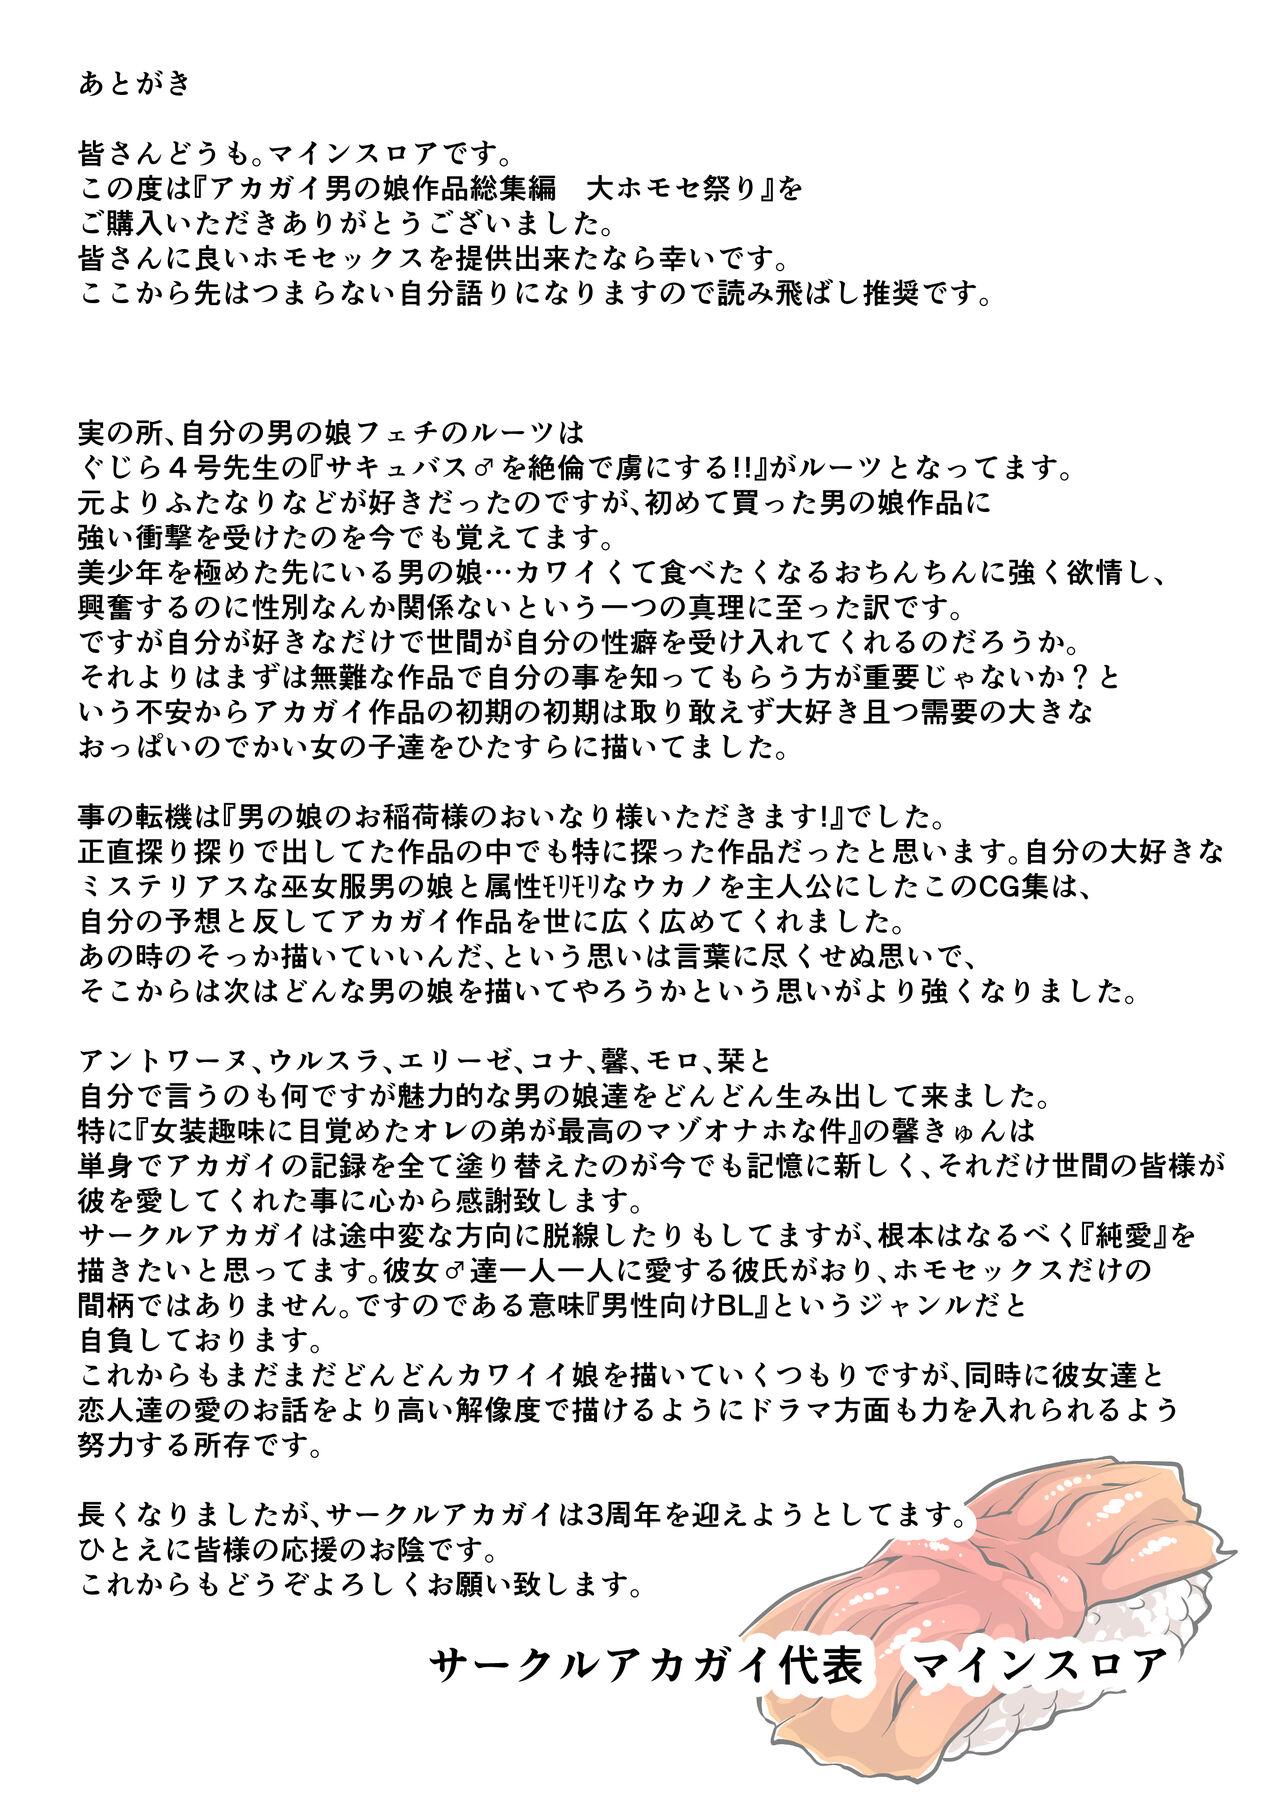 Spreading Omake Manga Blond - Page 8